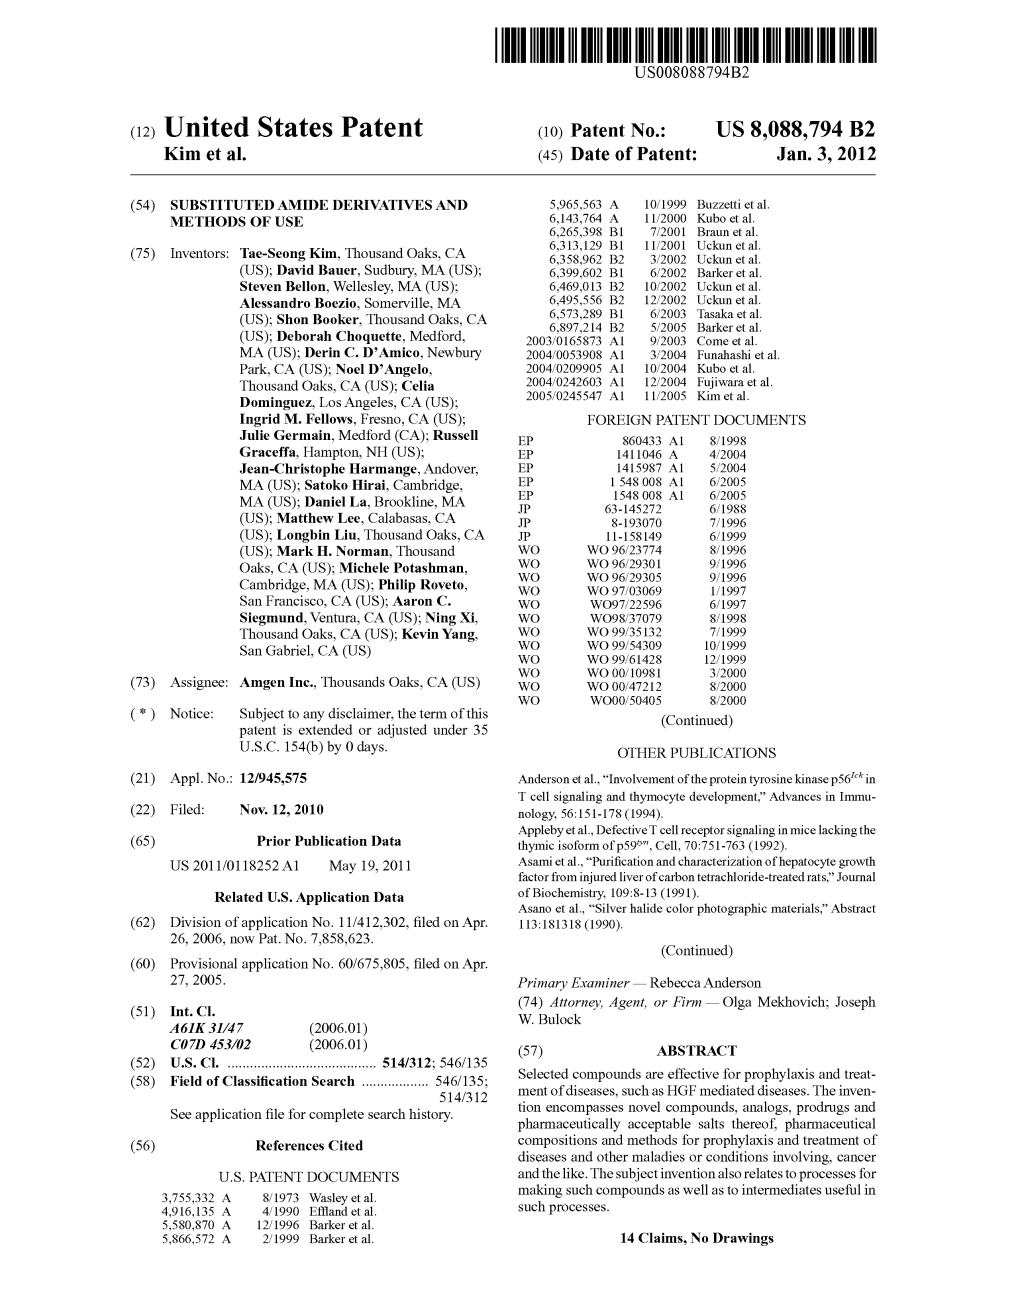 (12) United States Patent (10) Patent No.: US 8,088,794 B2 Kim Et Al